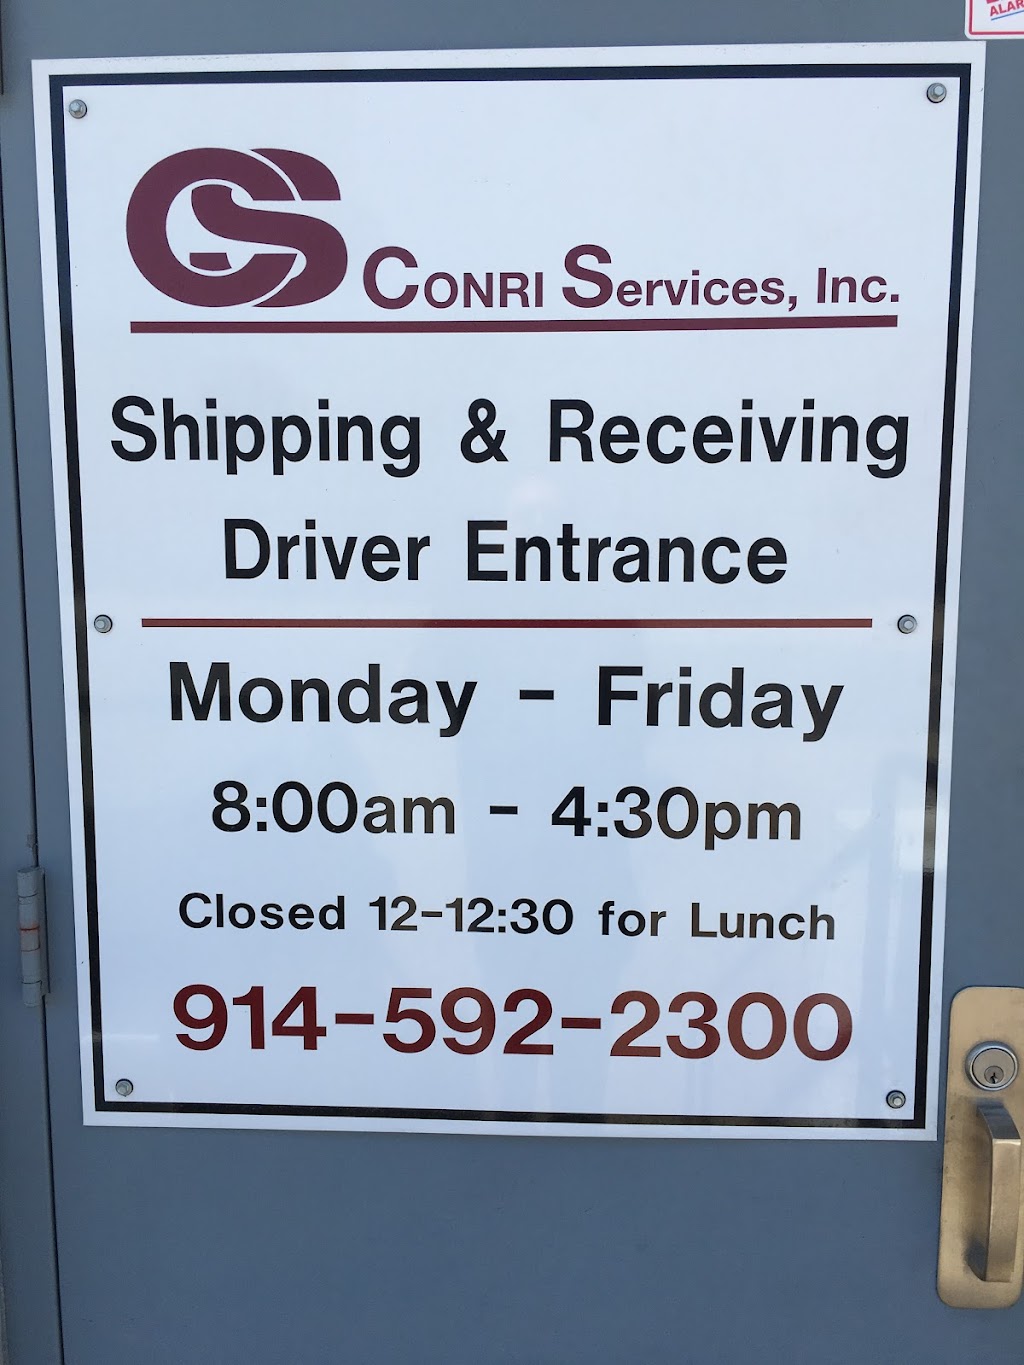 CONRI Services, Inc. | 9 Brick Plant Rd, South River, NJ 08882 | Phone: (914) 592-2300